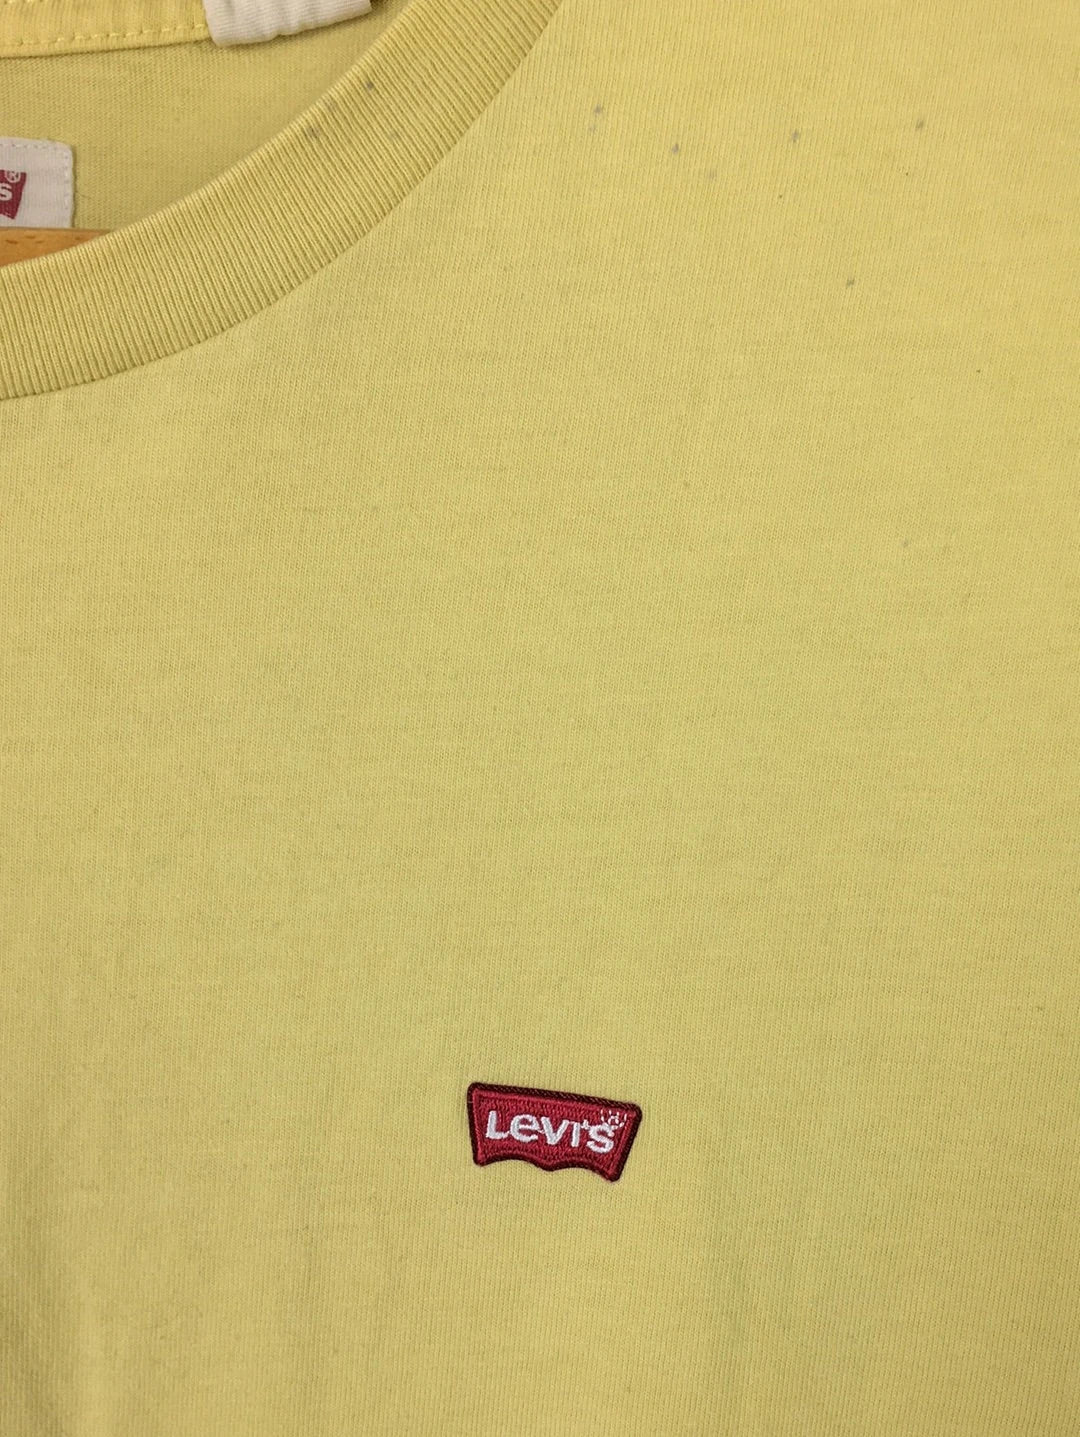 Levi's T-Shirt (M)